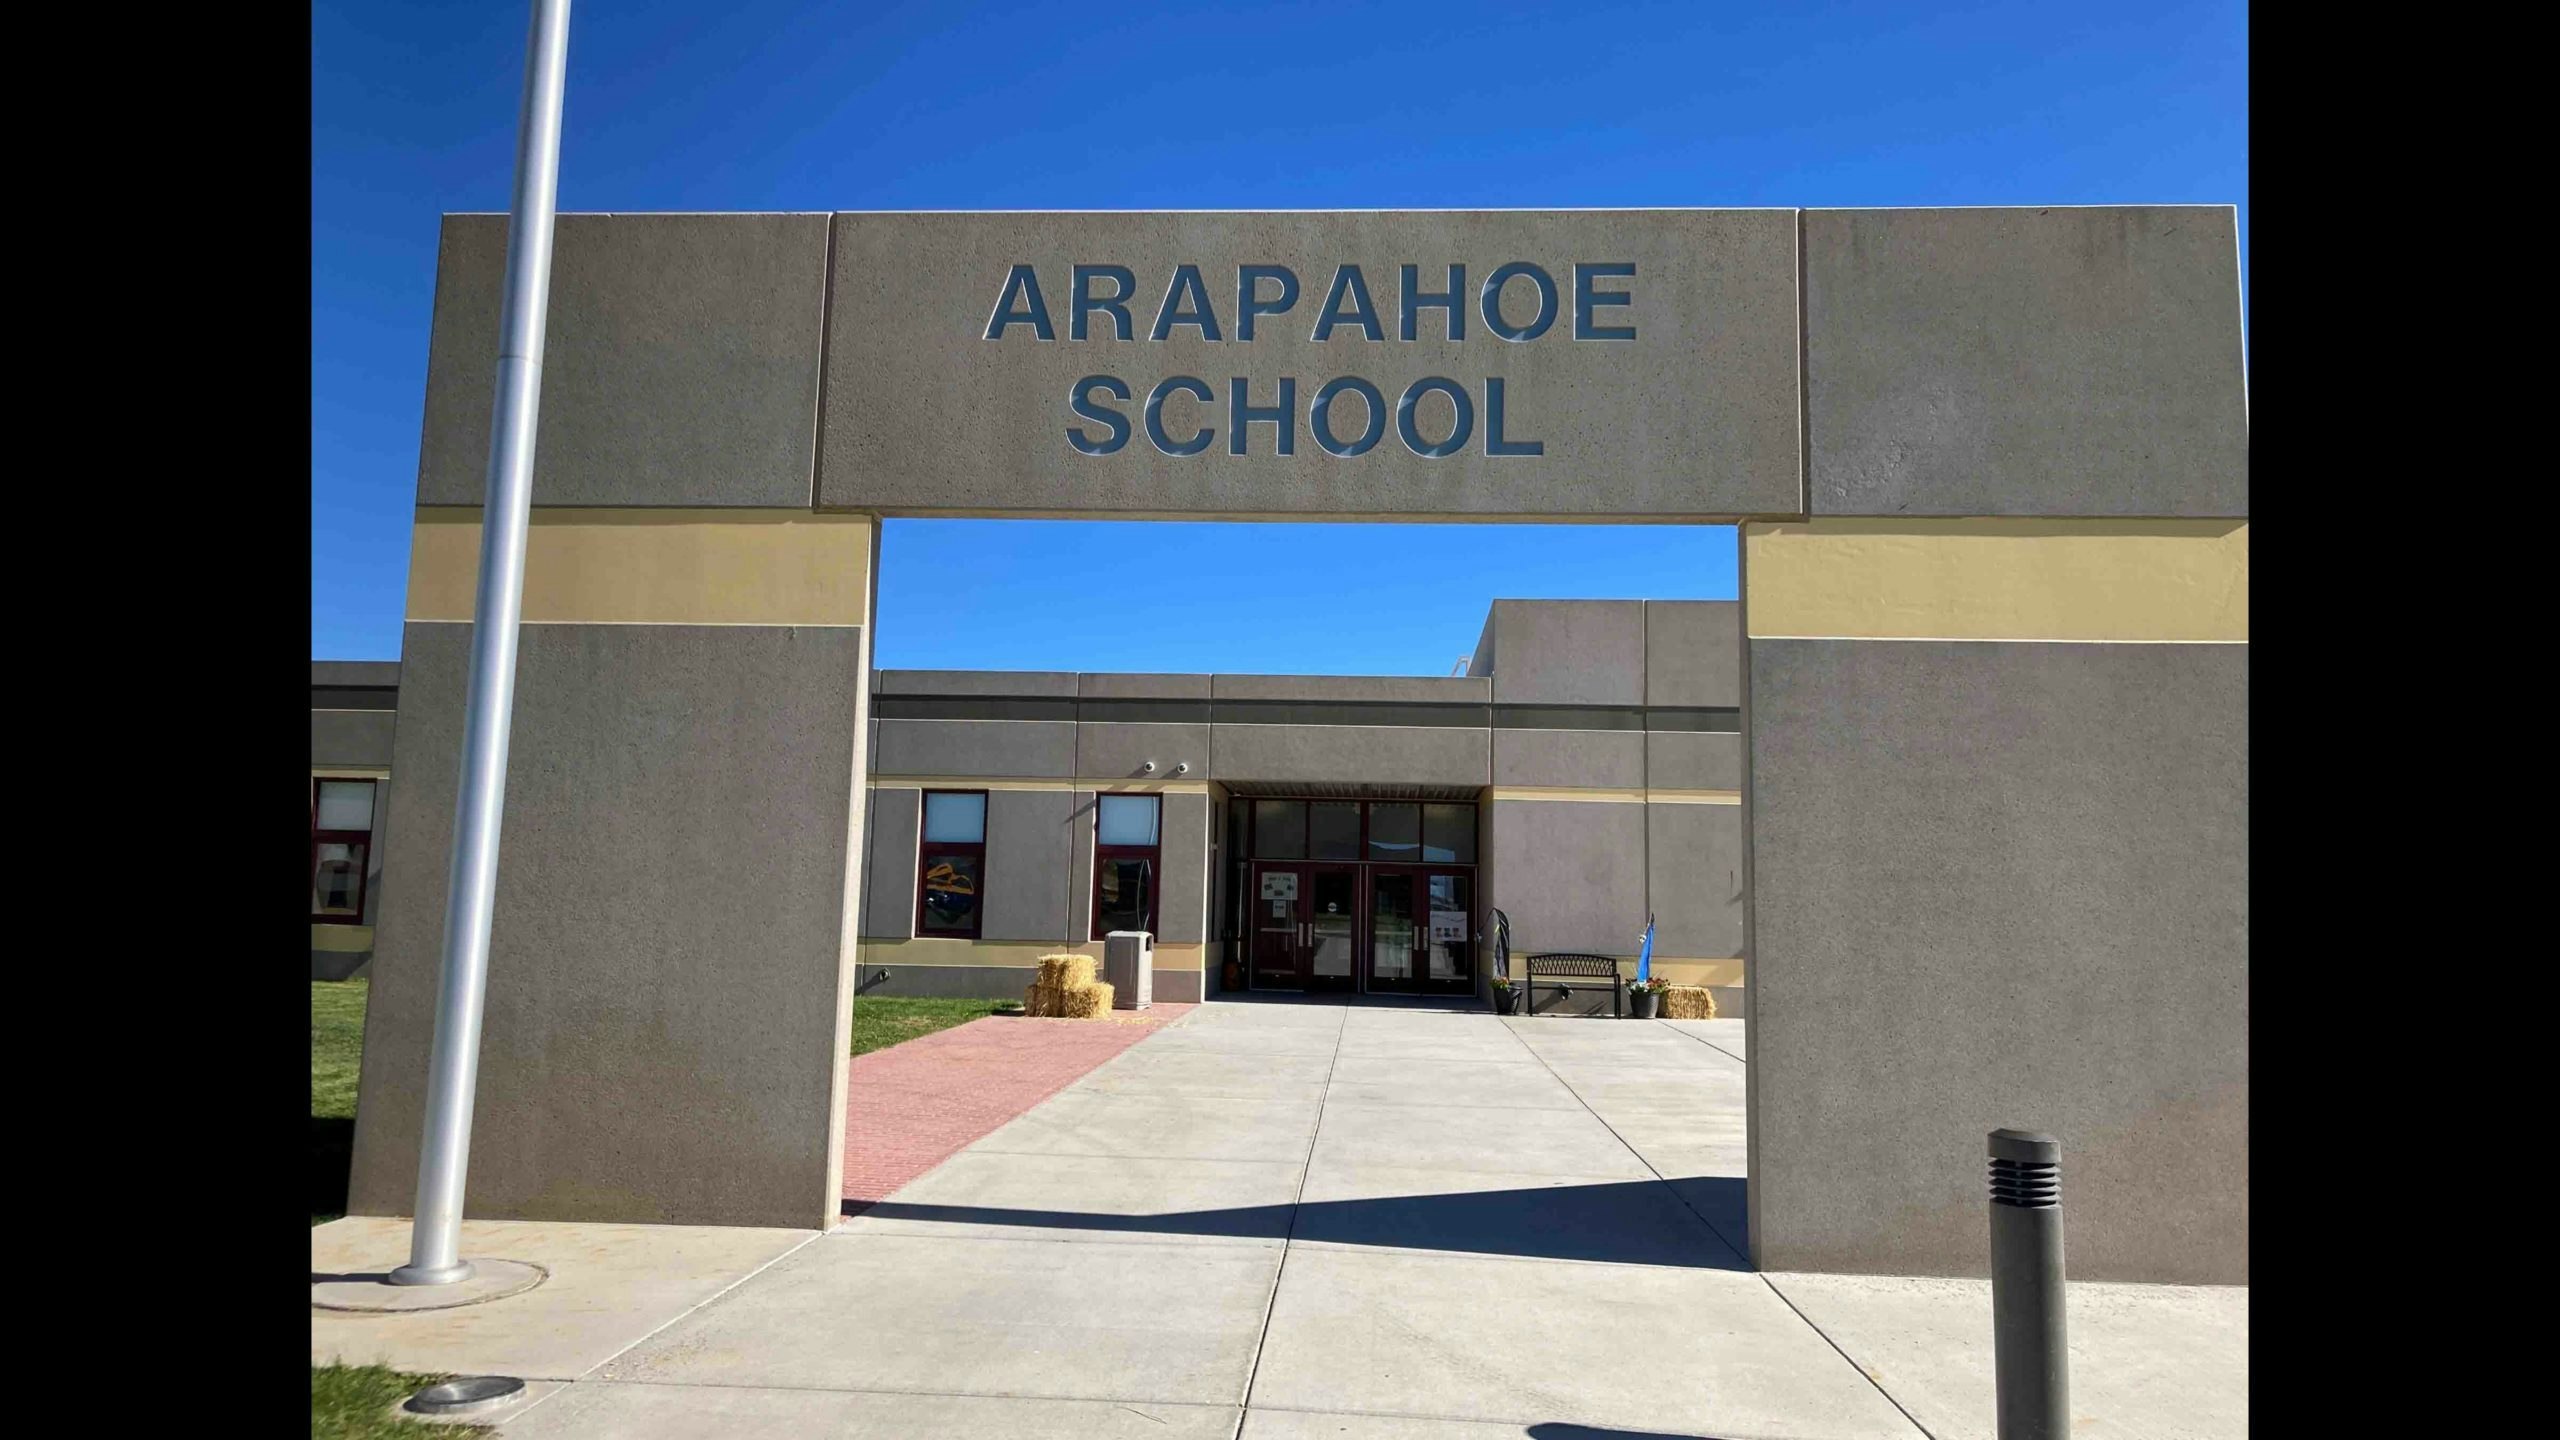 Arapahoe school 10 20 22 scaled